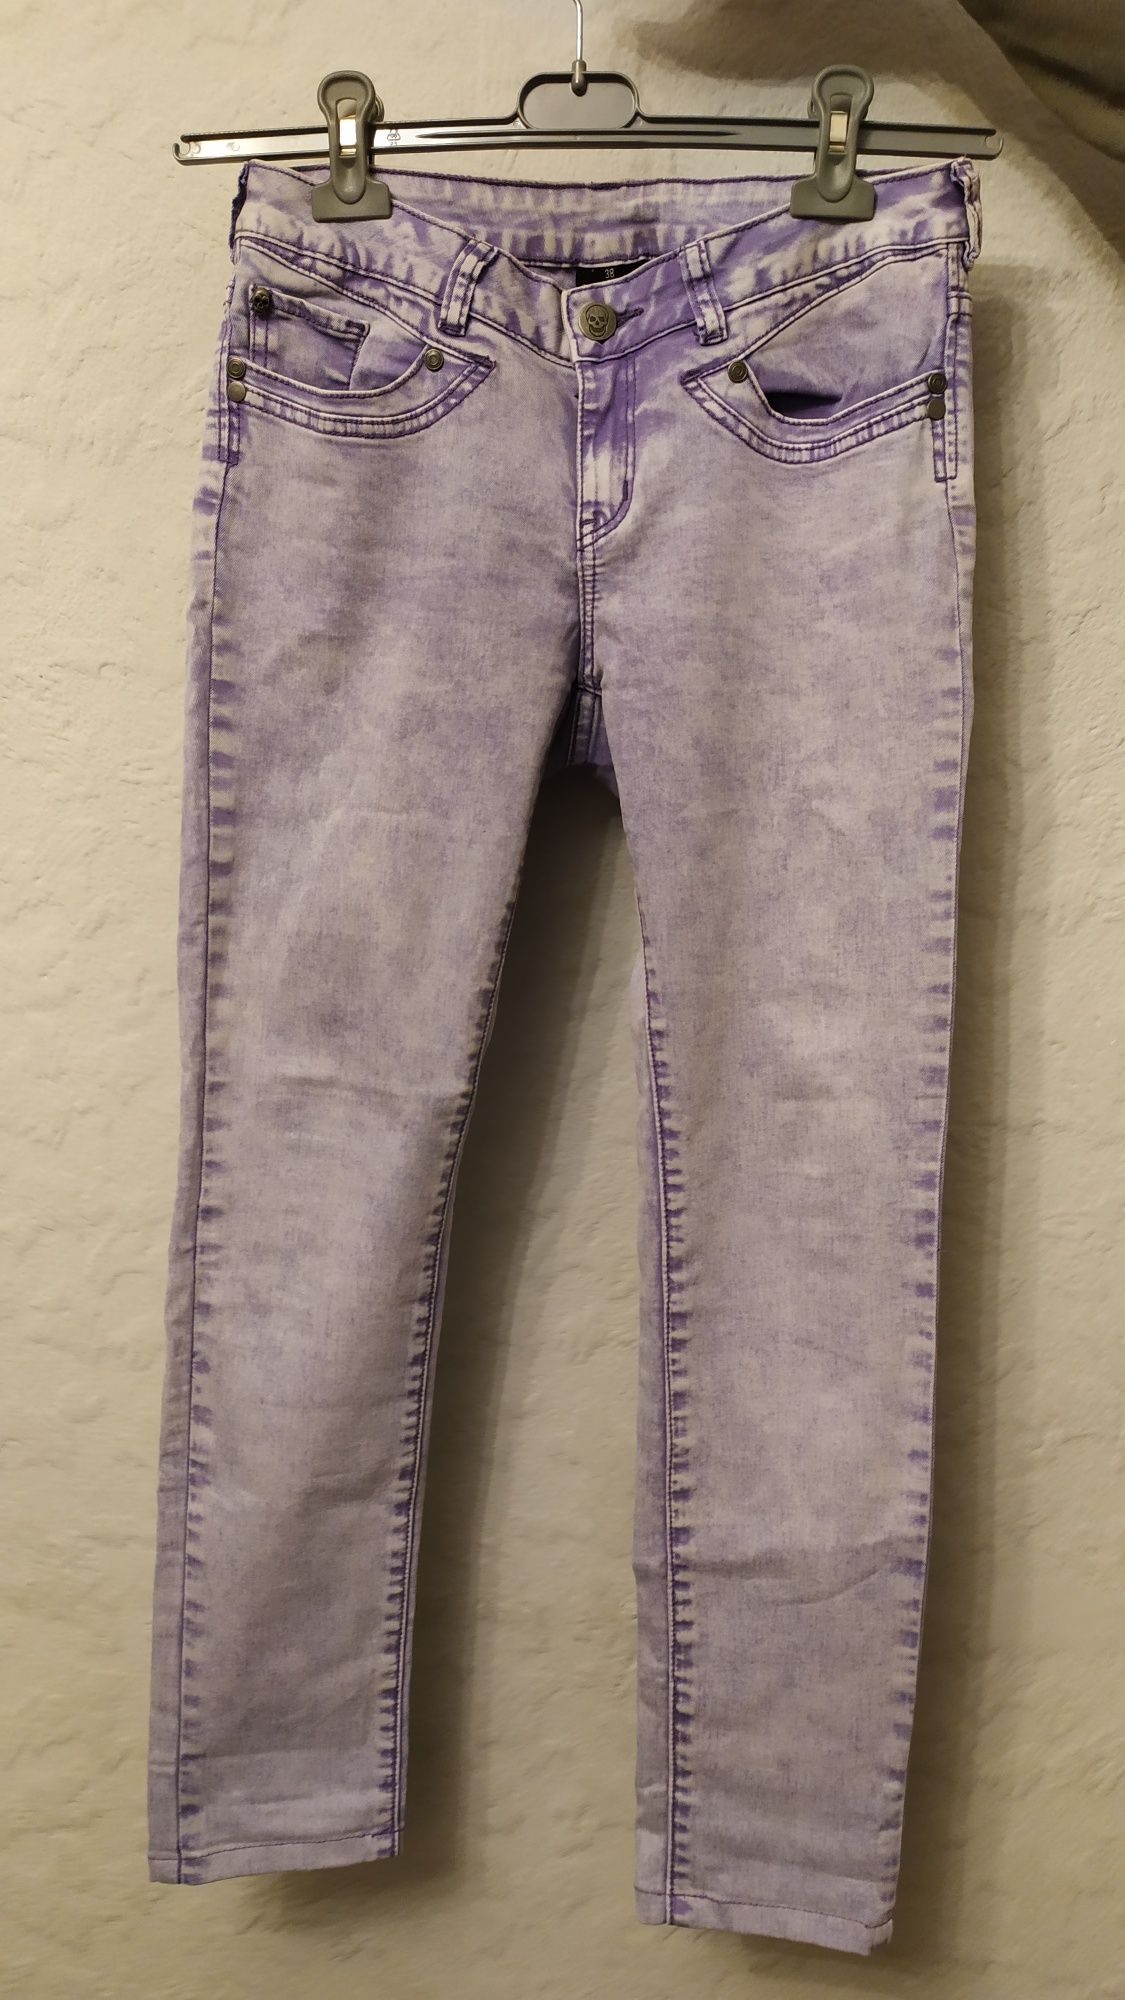 Spodnie jeansy, rozmiar 38 (36), marmurki